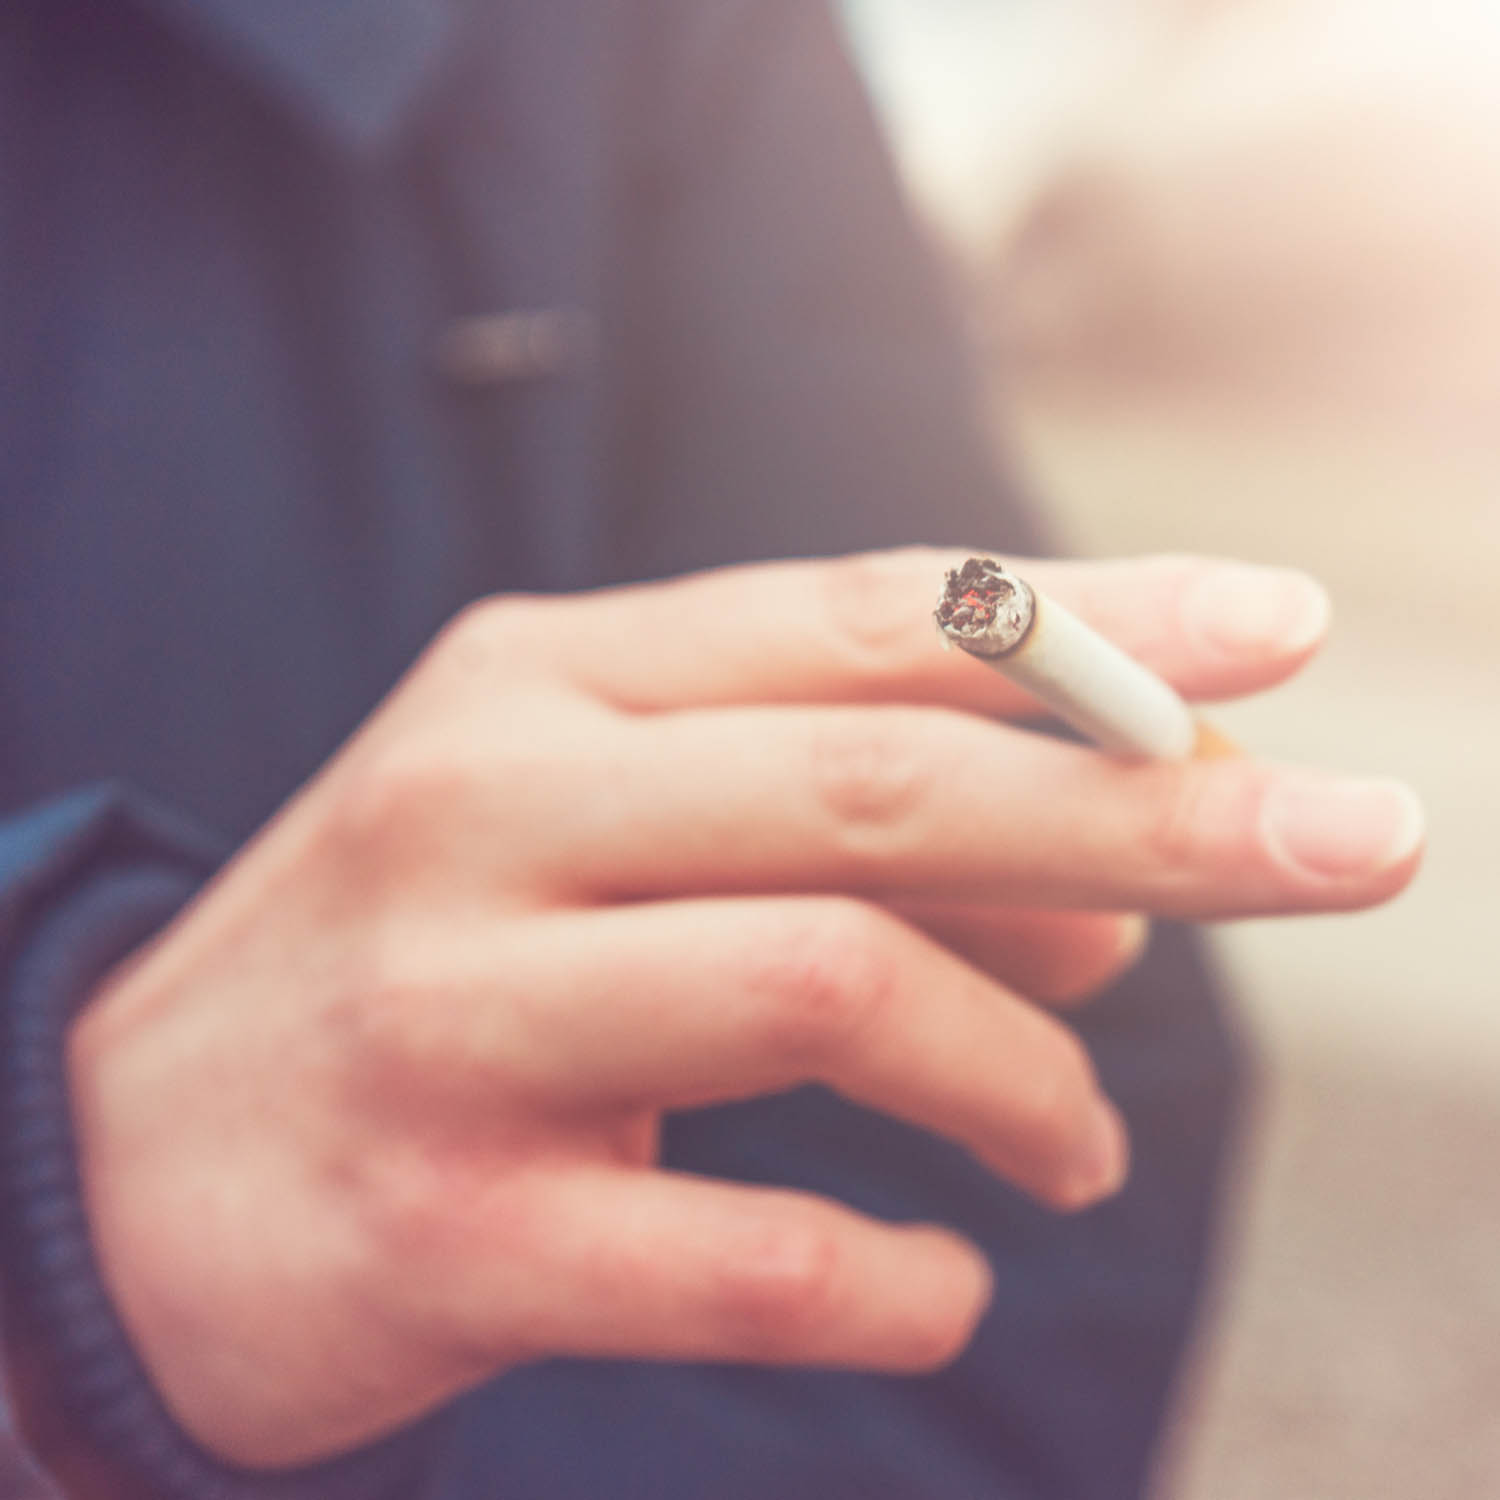 No smoker left behind: helping all Australians quit